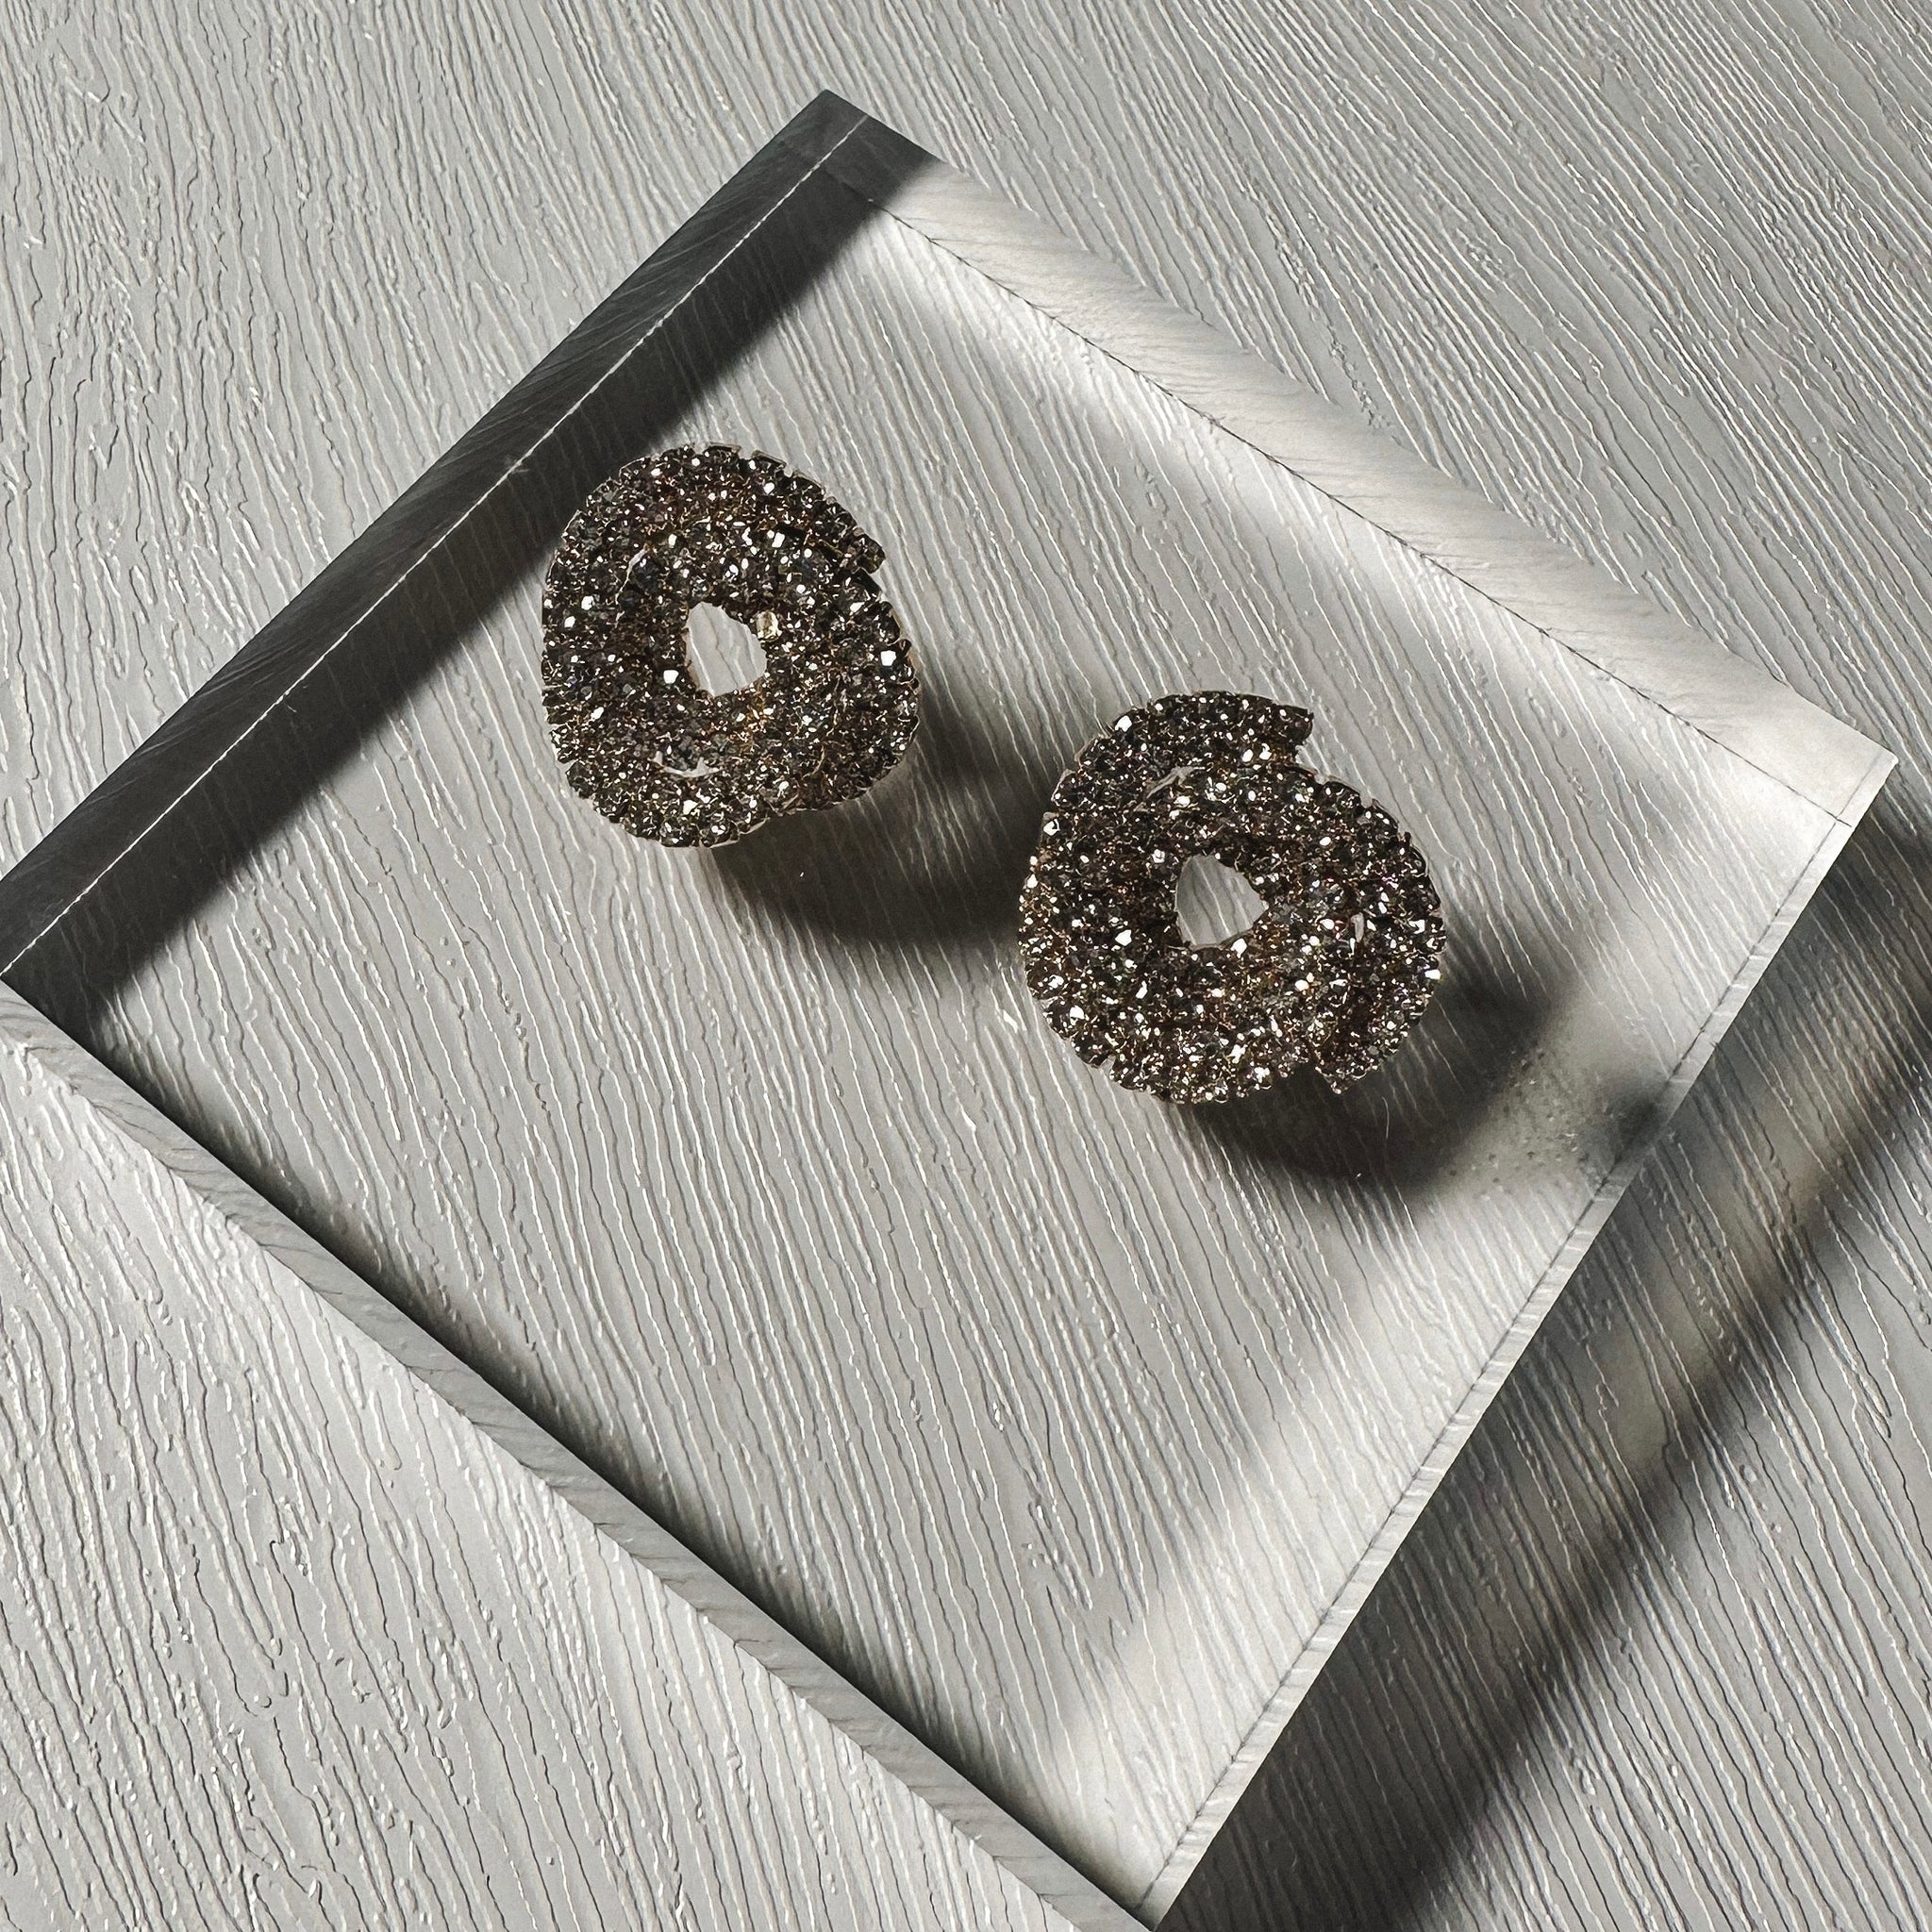 Rhinestone Button Earrings (2 Colors)